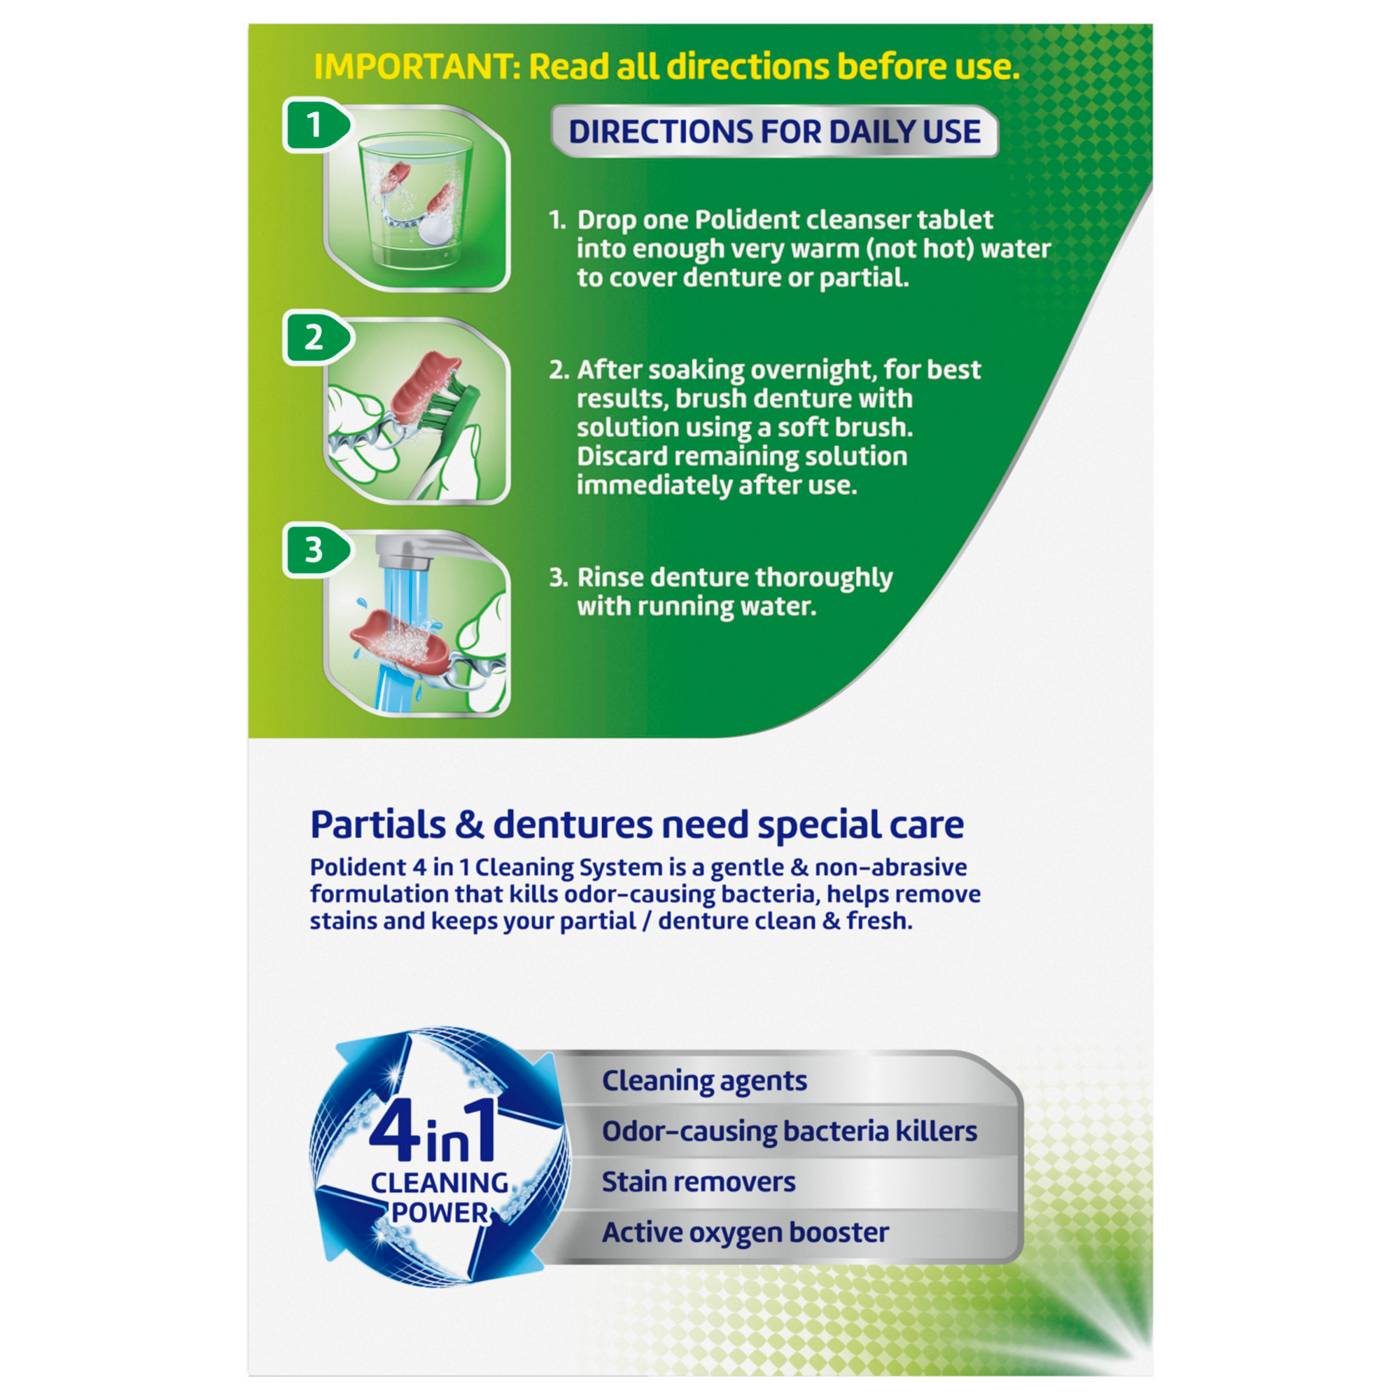 Polident Overnight Whitening Antibacterial Denture Cleanser; image 4 of 8